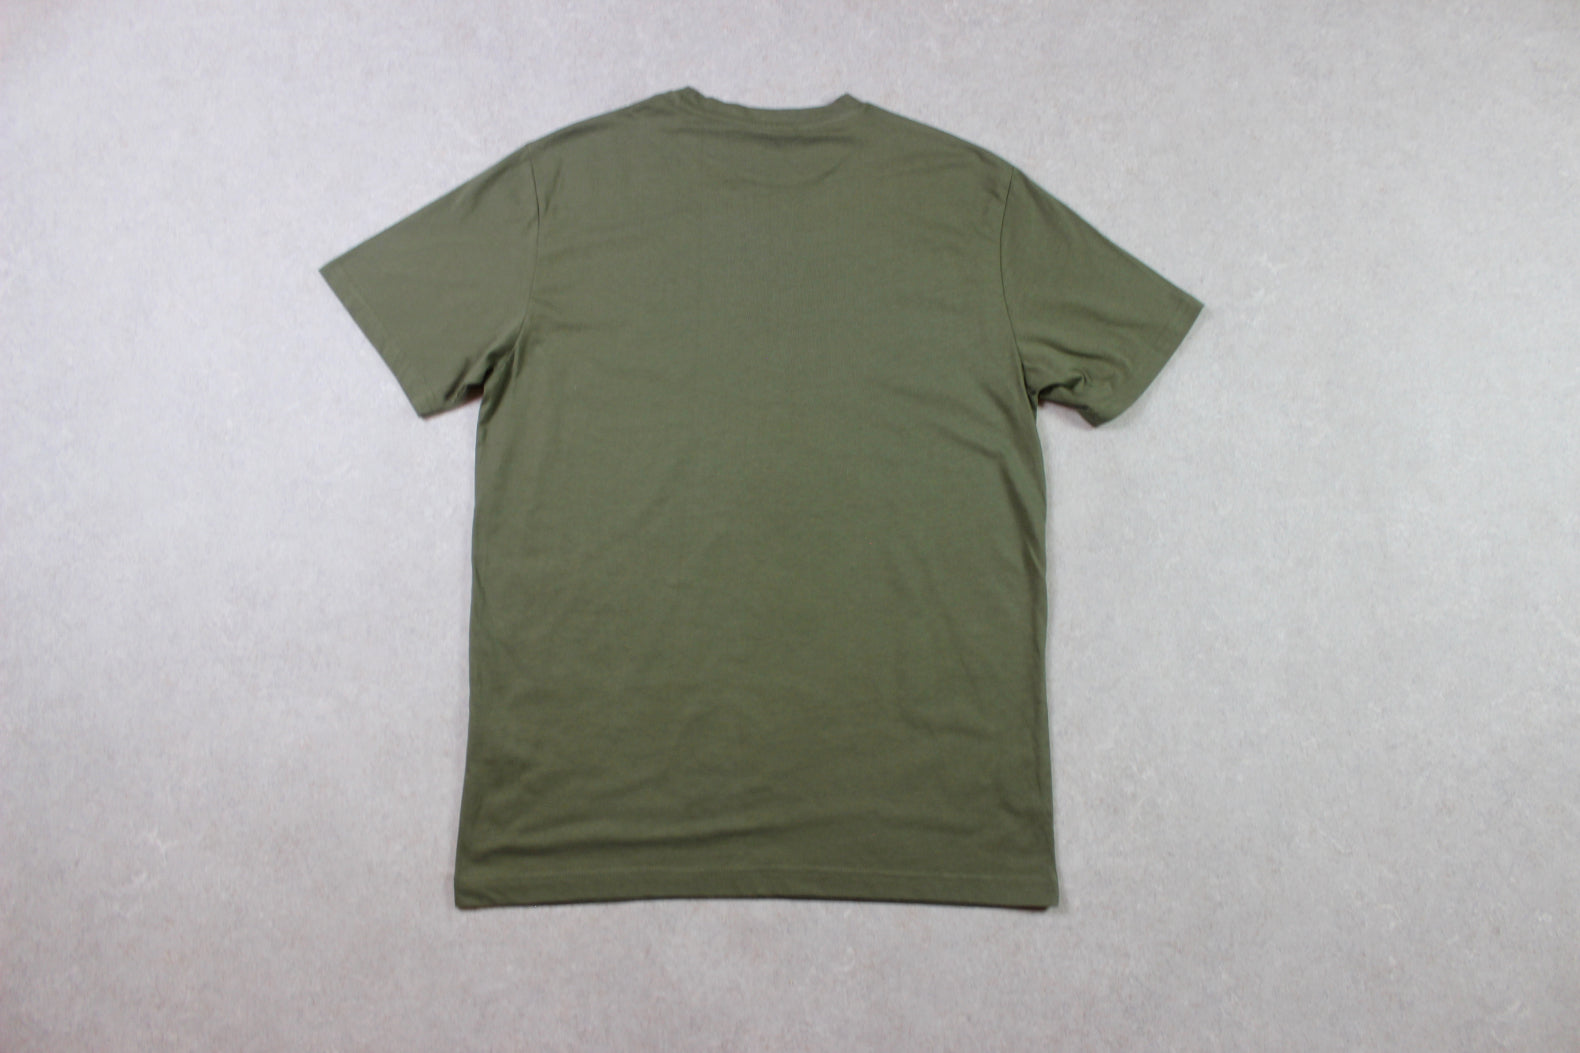 Sunspel - T Shirt - Green - Medium - Brand New